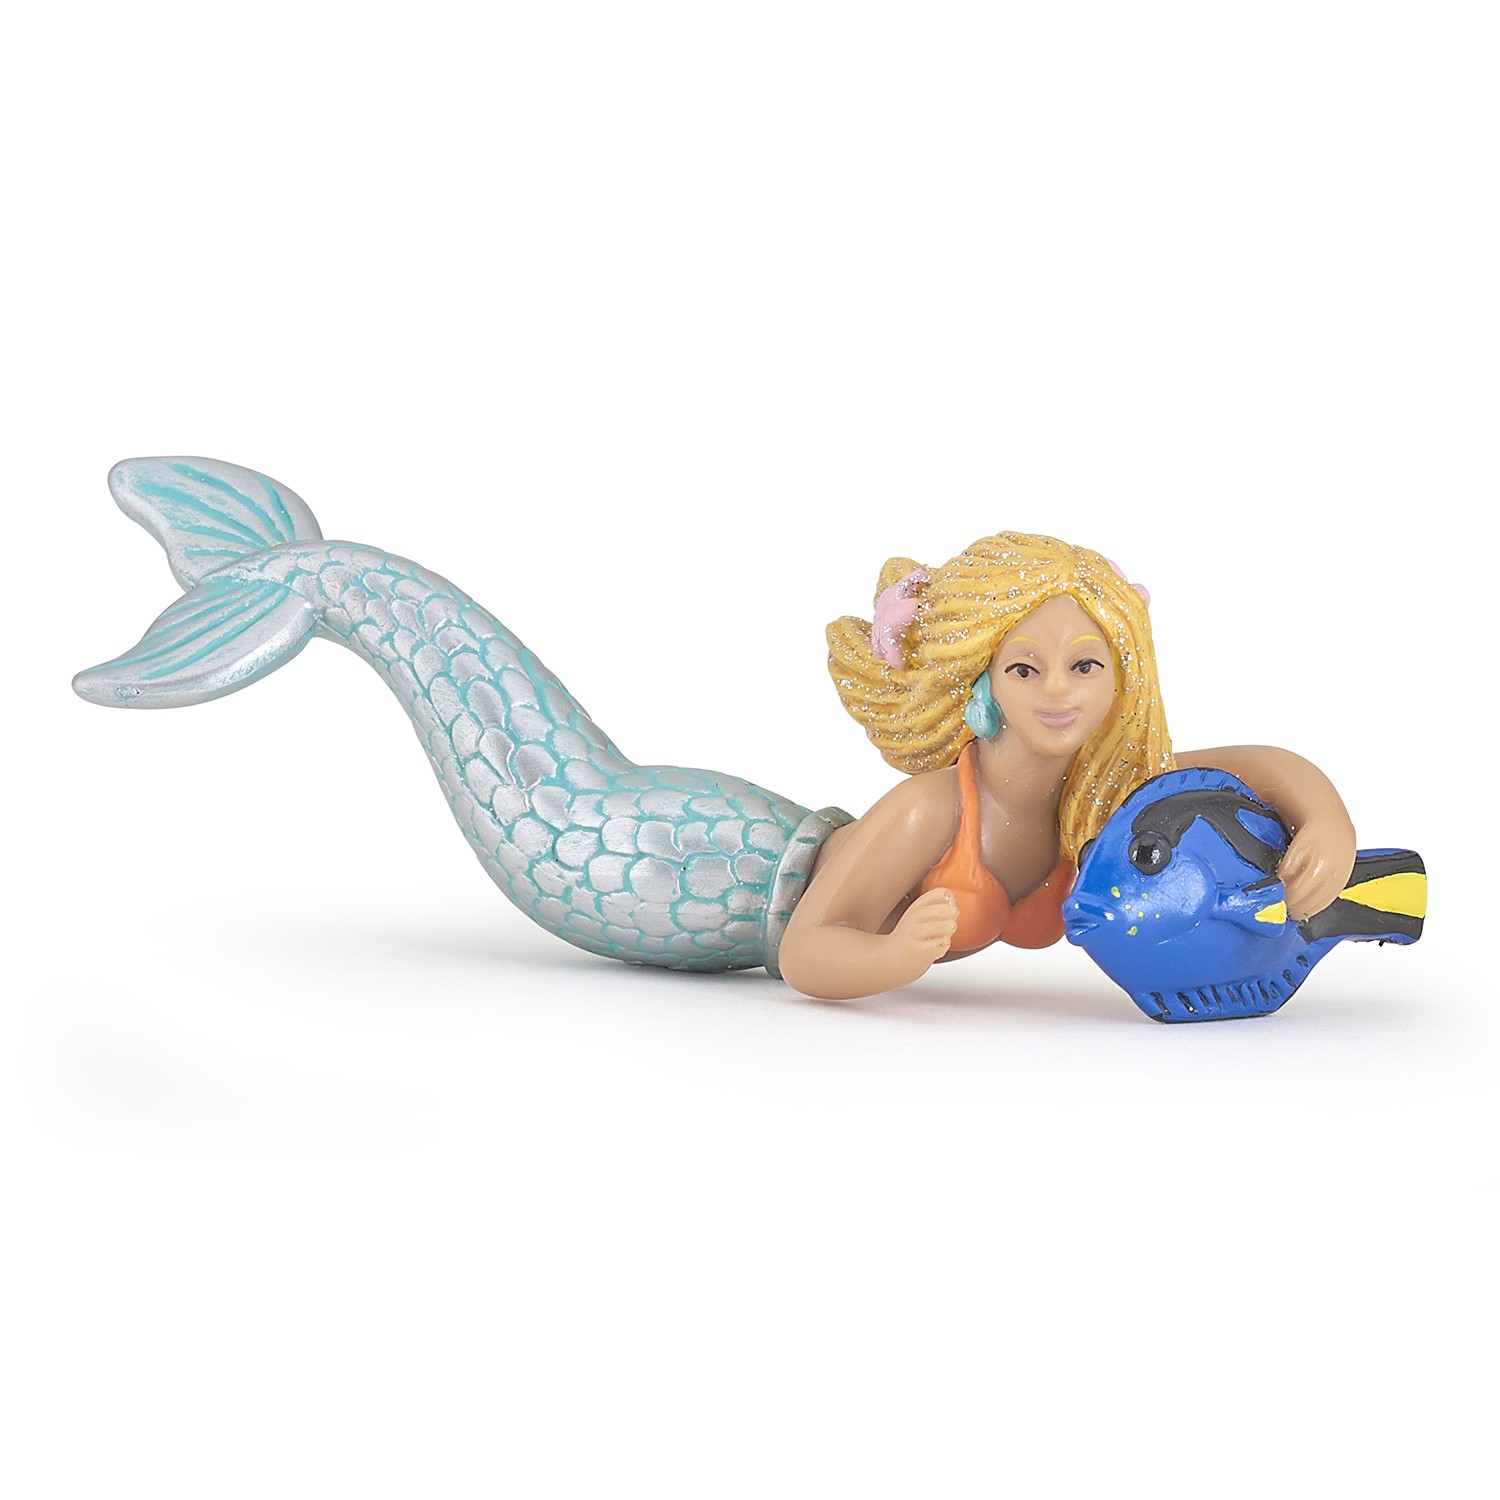 Enchanted World Swimming Mermaid figure Papo Model 39163